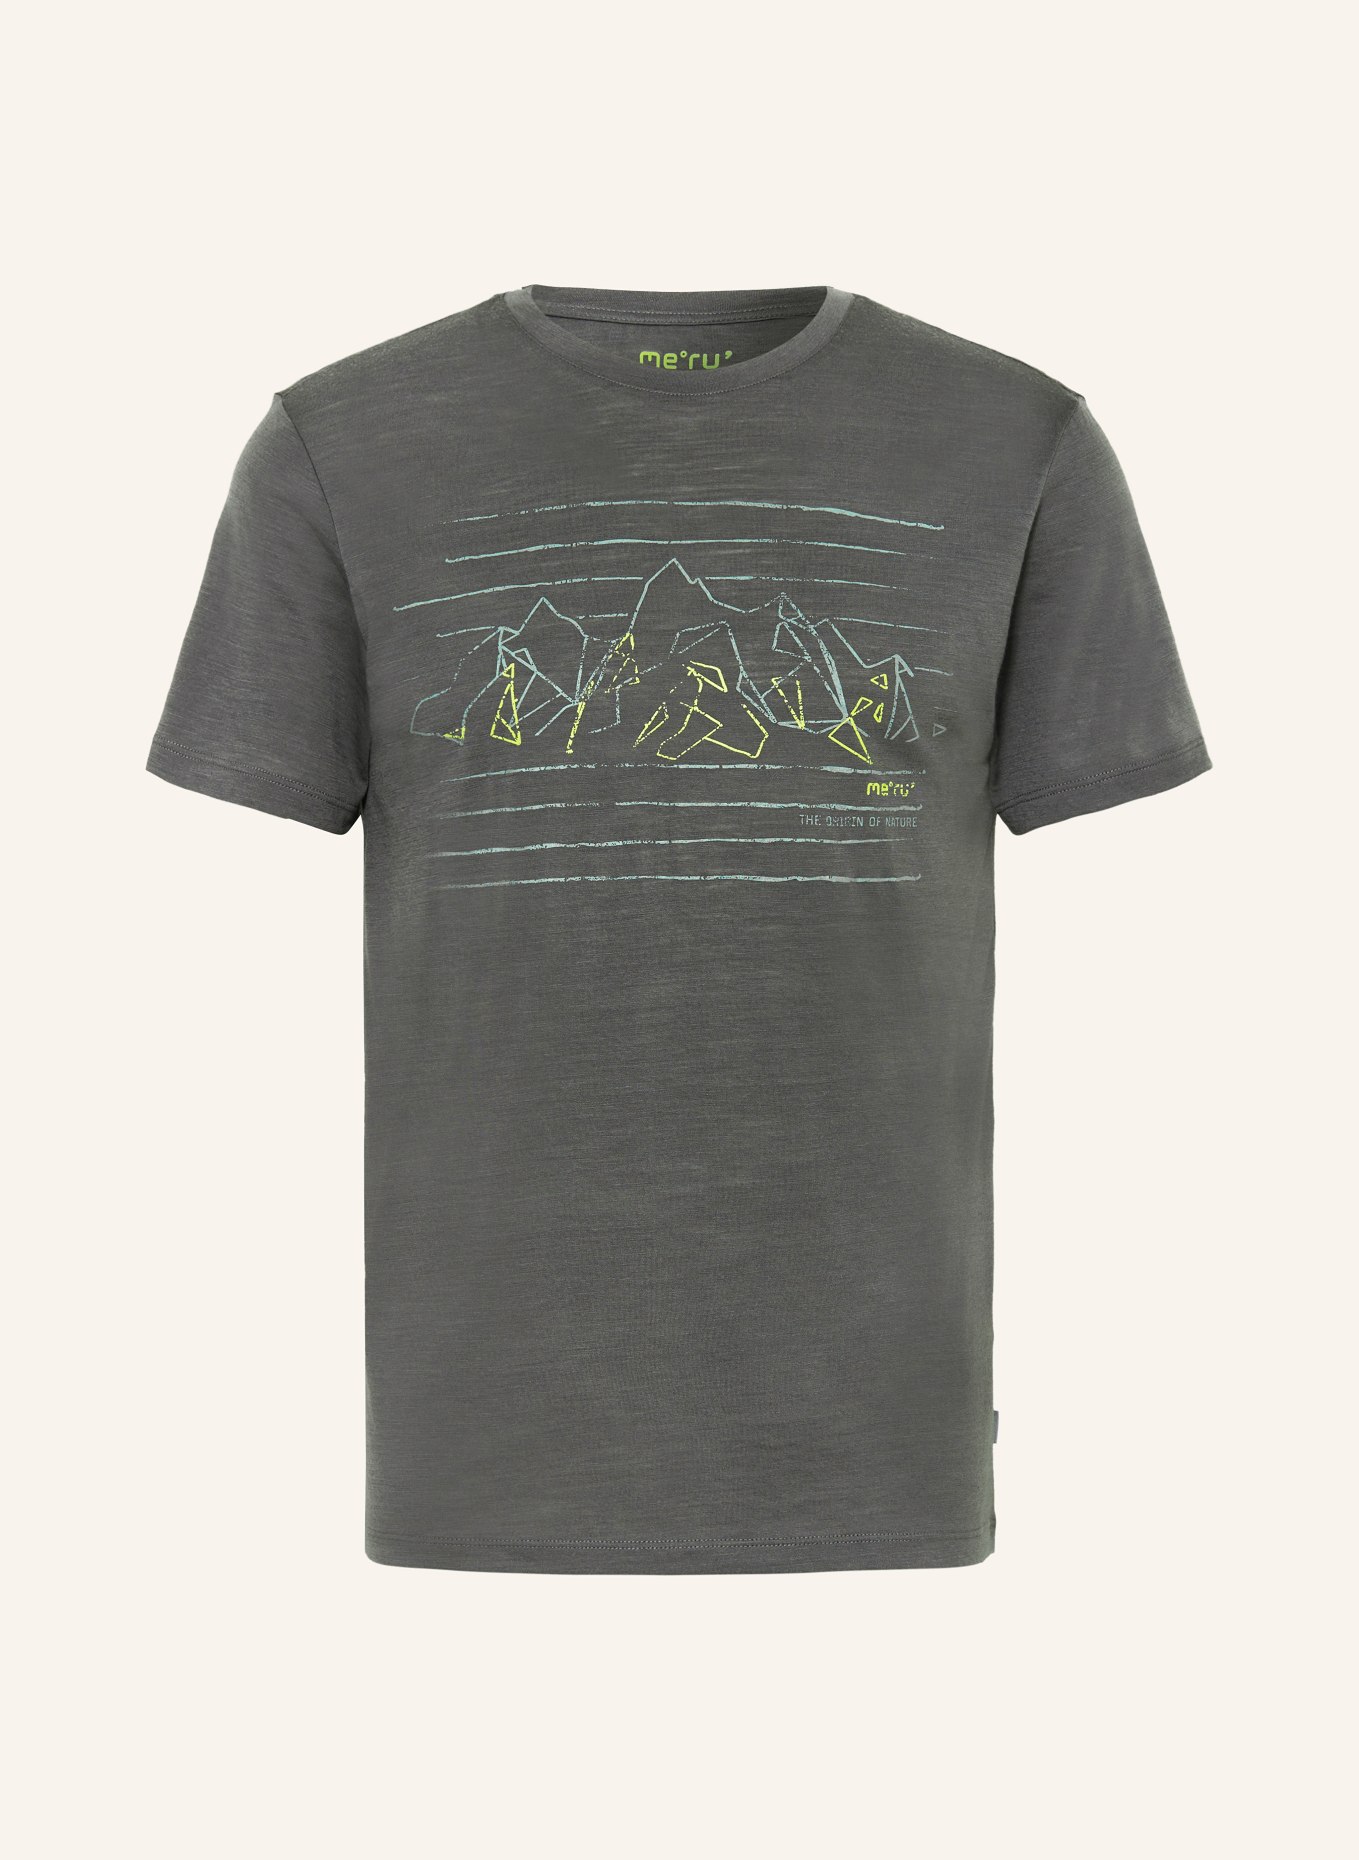 me°ru' T-Shirt LORDELO, Farbe: GRAU (Bild 1)